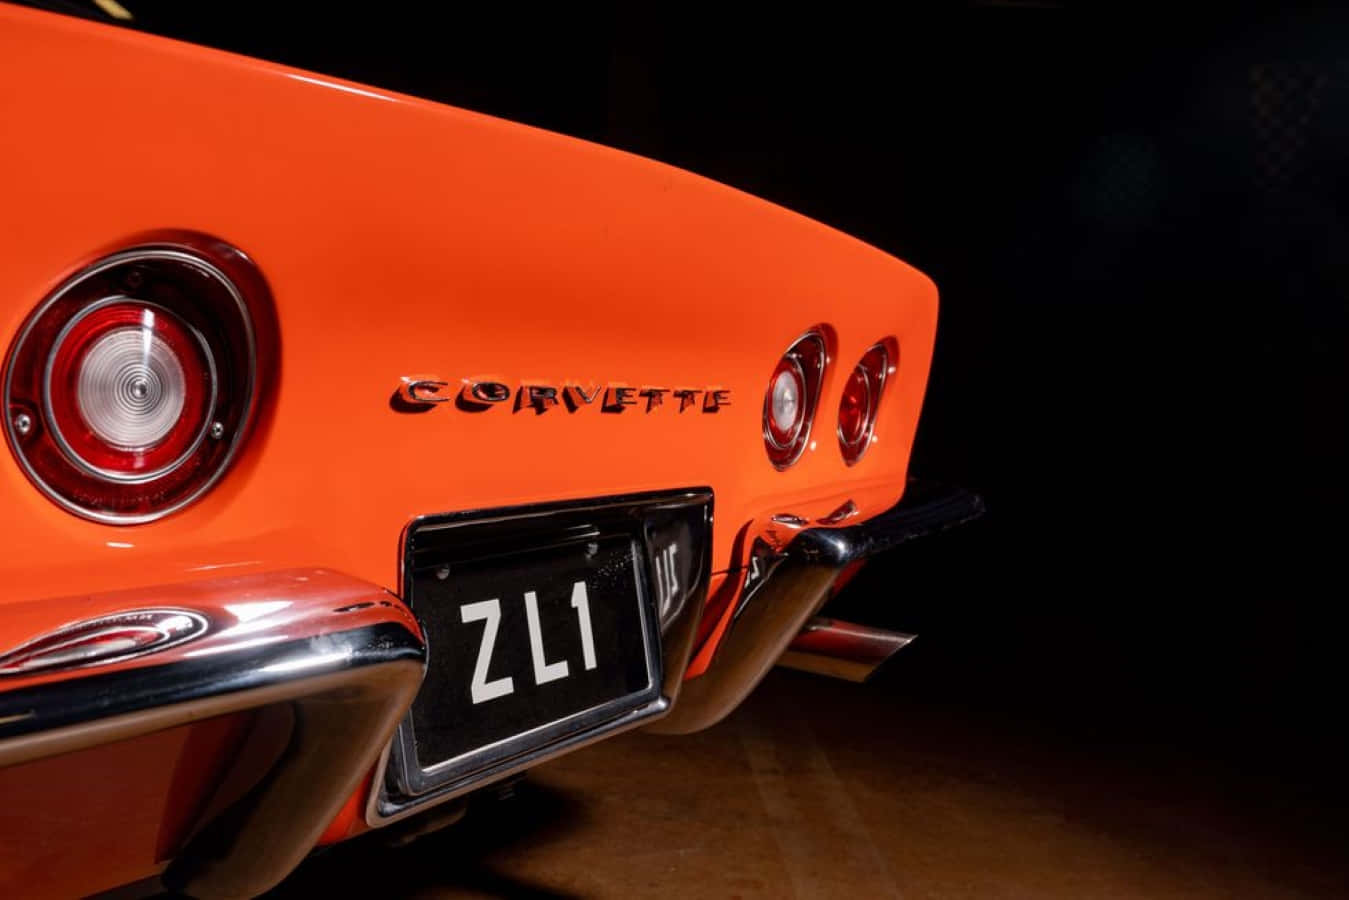 Impresionantechevrolet Corvette Zl1 En Naranja Vibrante. Fondo de pantalla